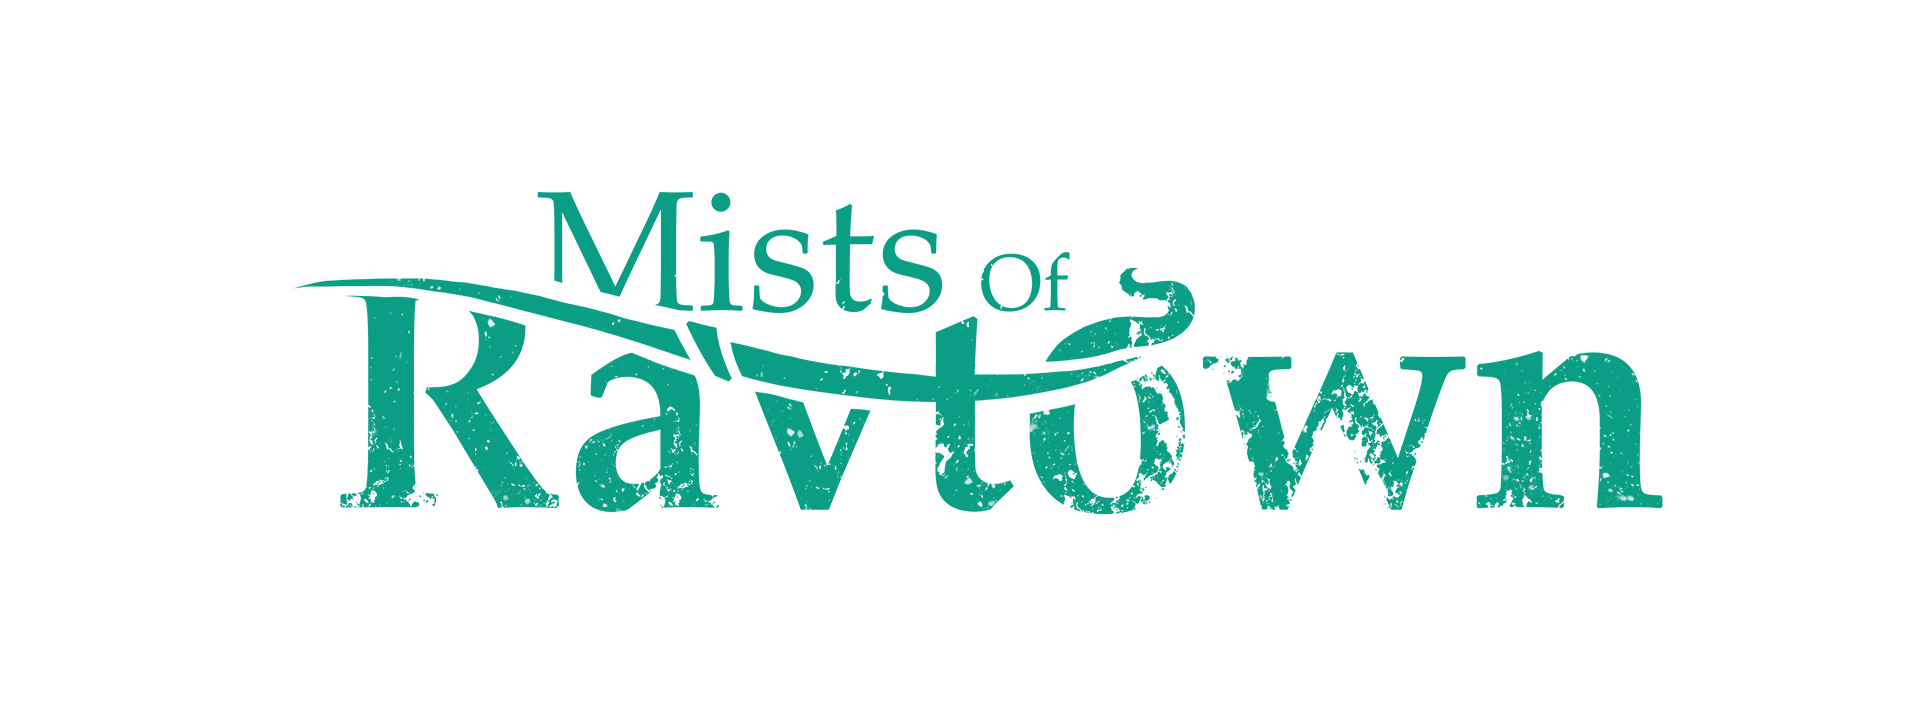 Mists of Ra'vtown